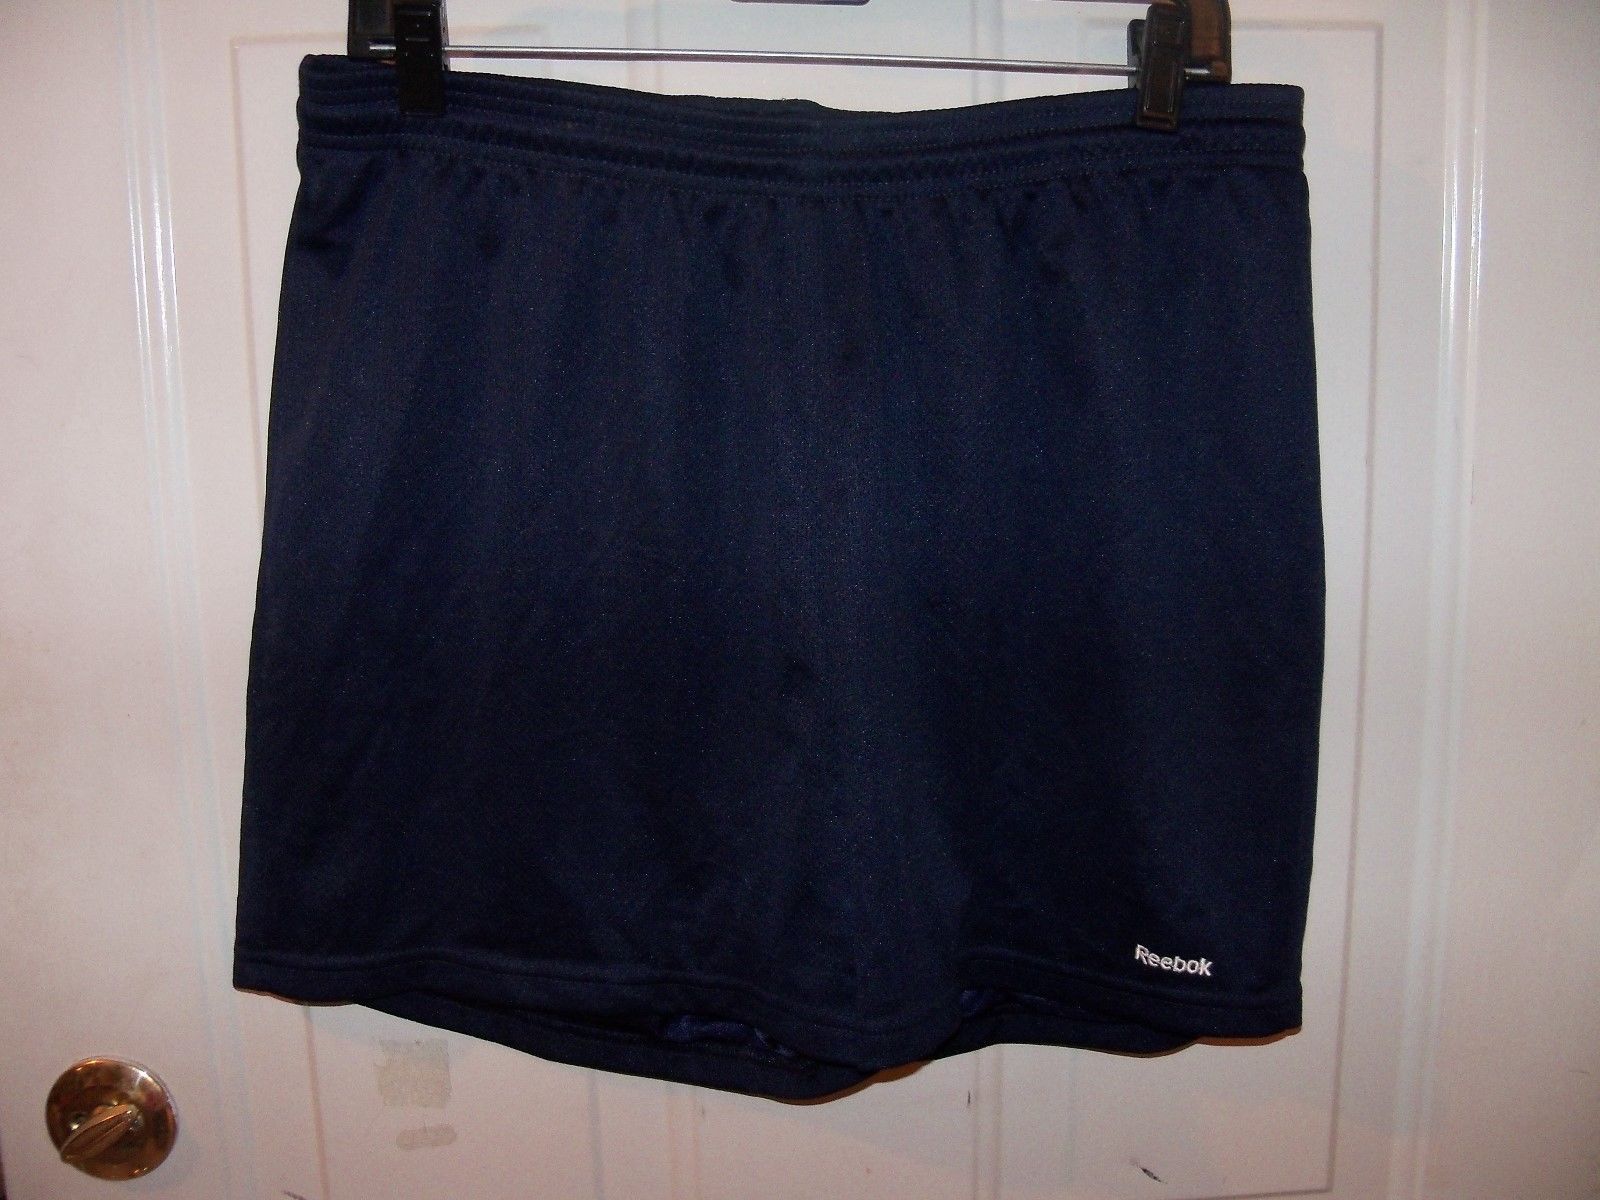 Reebok Play Dry Navy Blue Mesh Shorts Size Medium Men's NEW LAST ONE  - $41.99